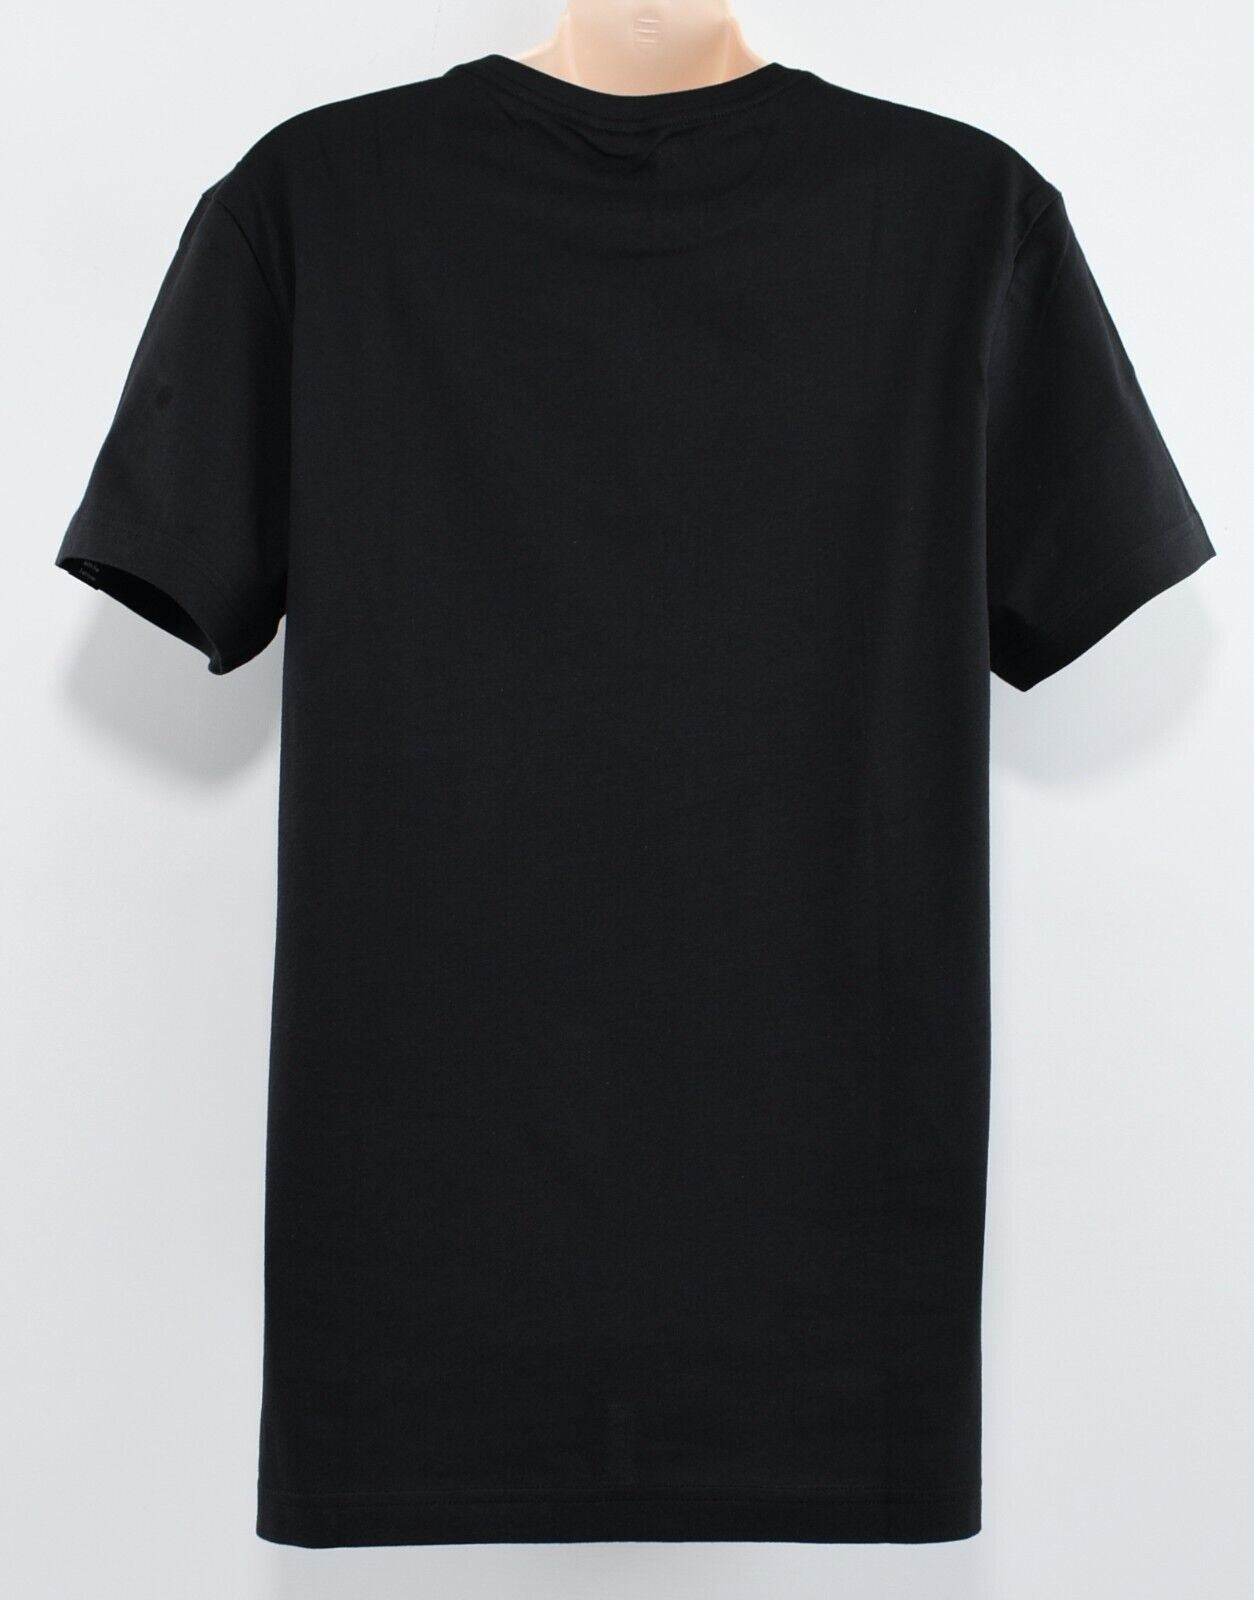 ADIDAS Women's Linear Love Logo Crew Neck T-shirt, Tee, Black, size XS (UK 4-6)